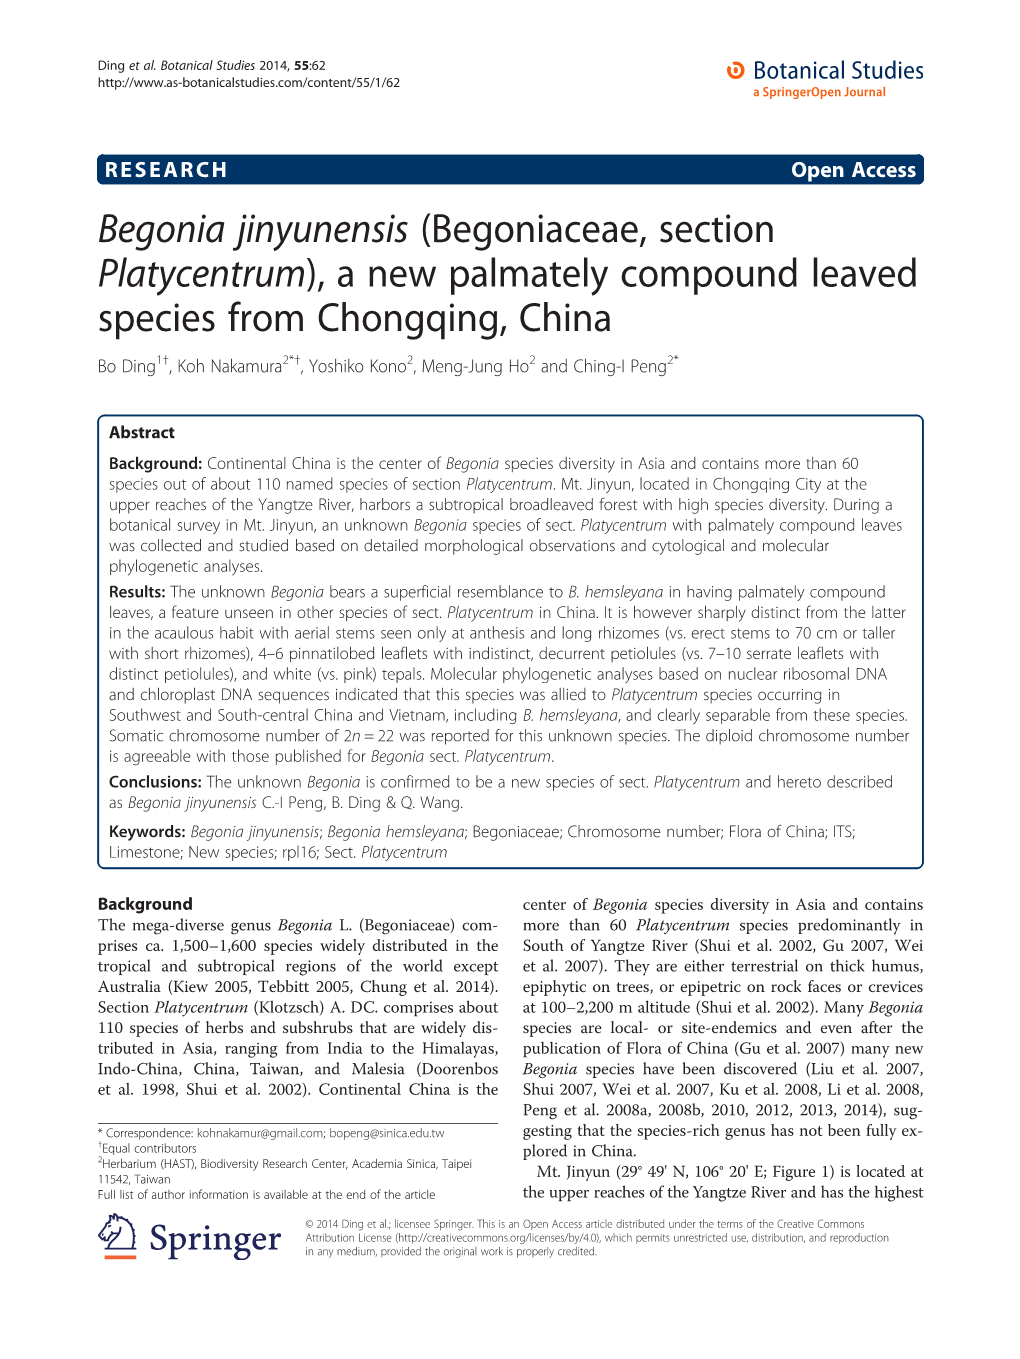 Begonia Jinyunensis (Begoniaceae, Section Platycentrum), a New